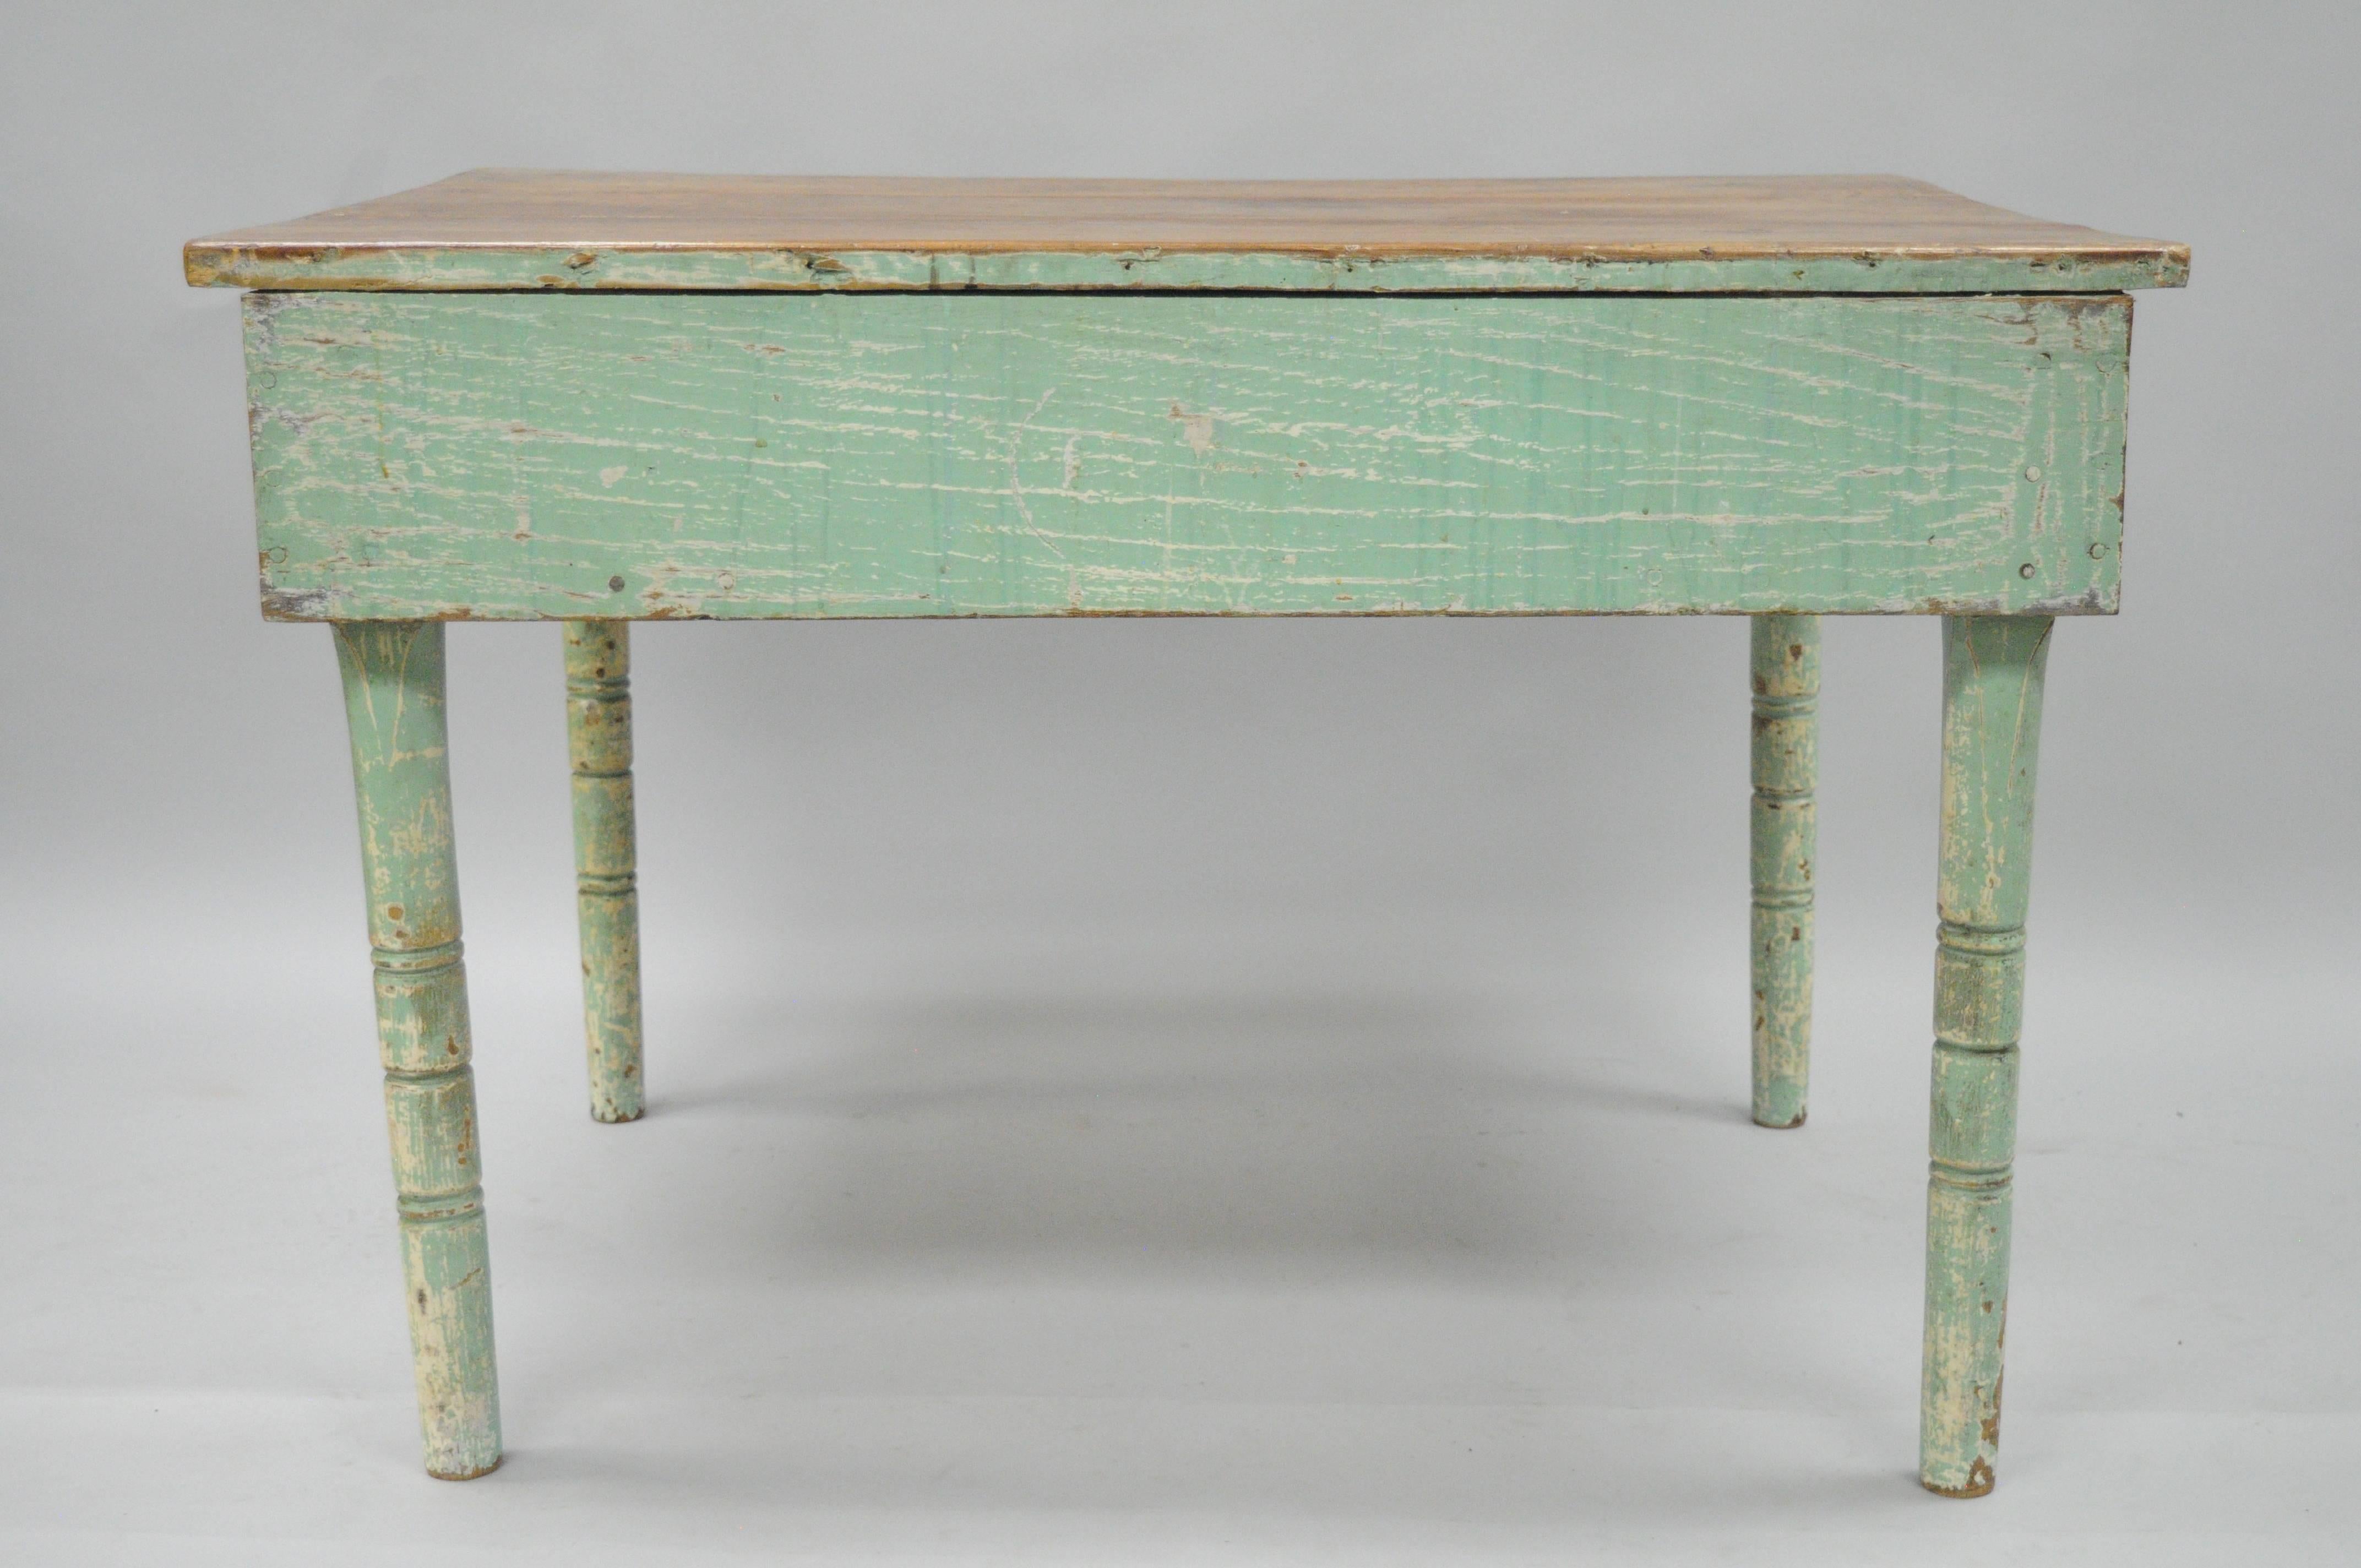 Amerikanischer primitiver blau-grüner, rustikaler Bauernhof-Tisch aus Barnholz, im Used-Stil, im Vintage-Stil (Holz) im Angebot